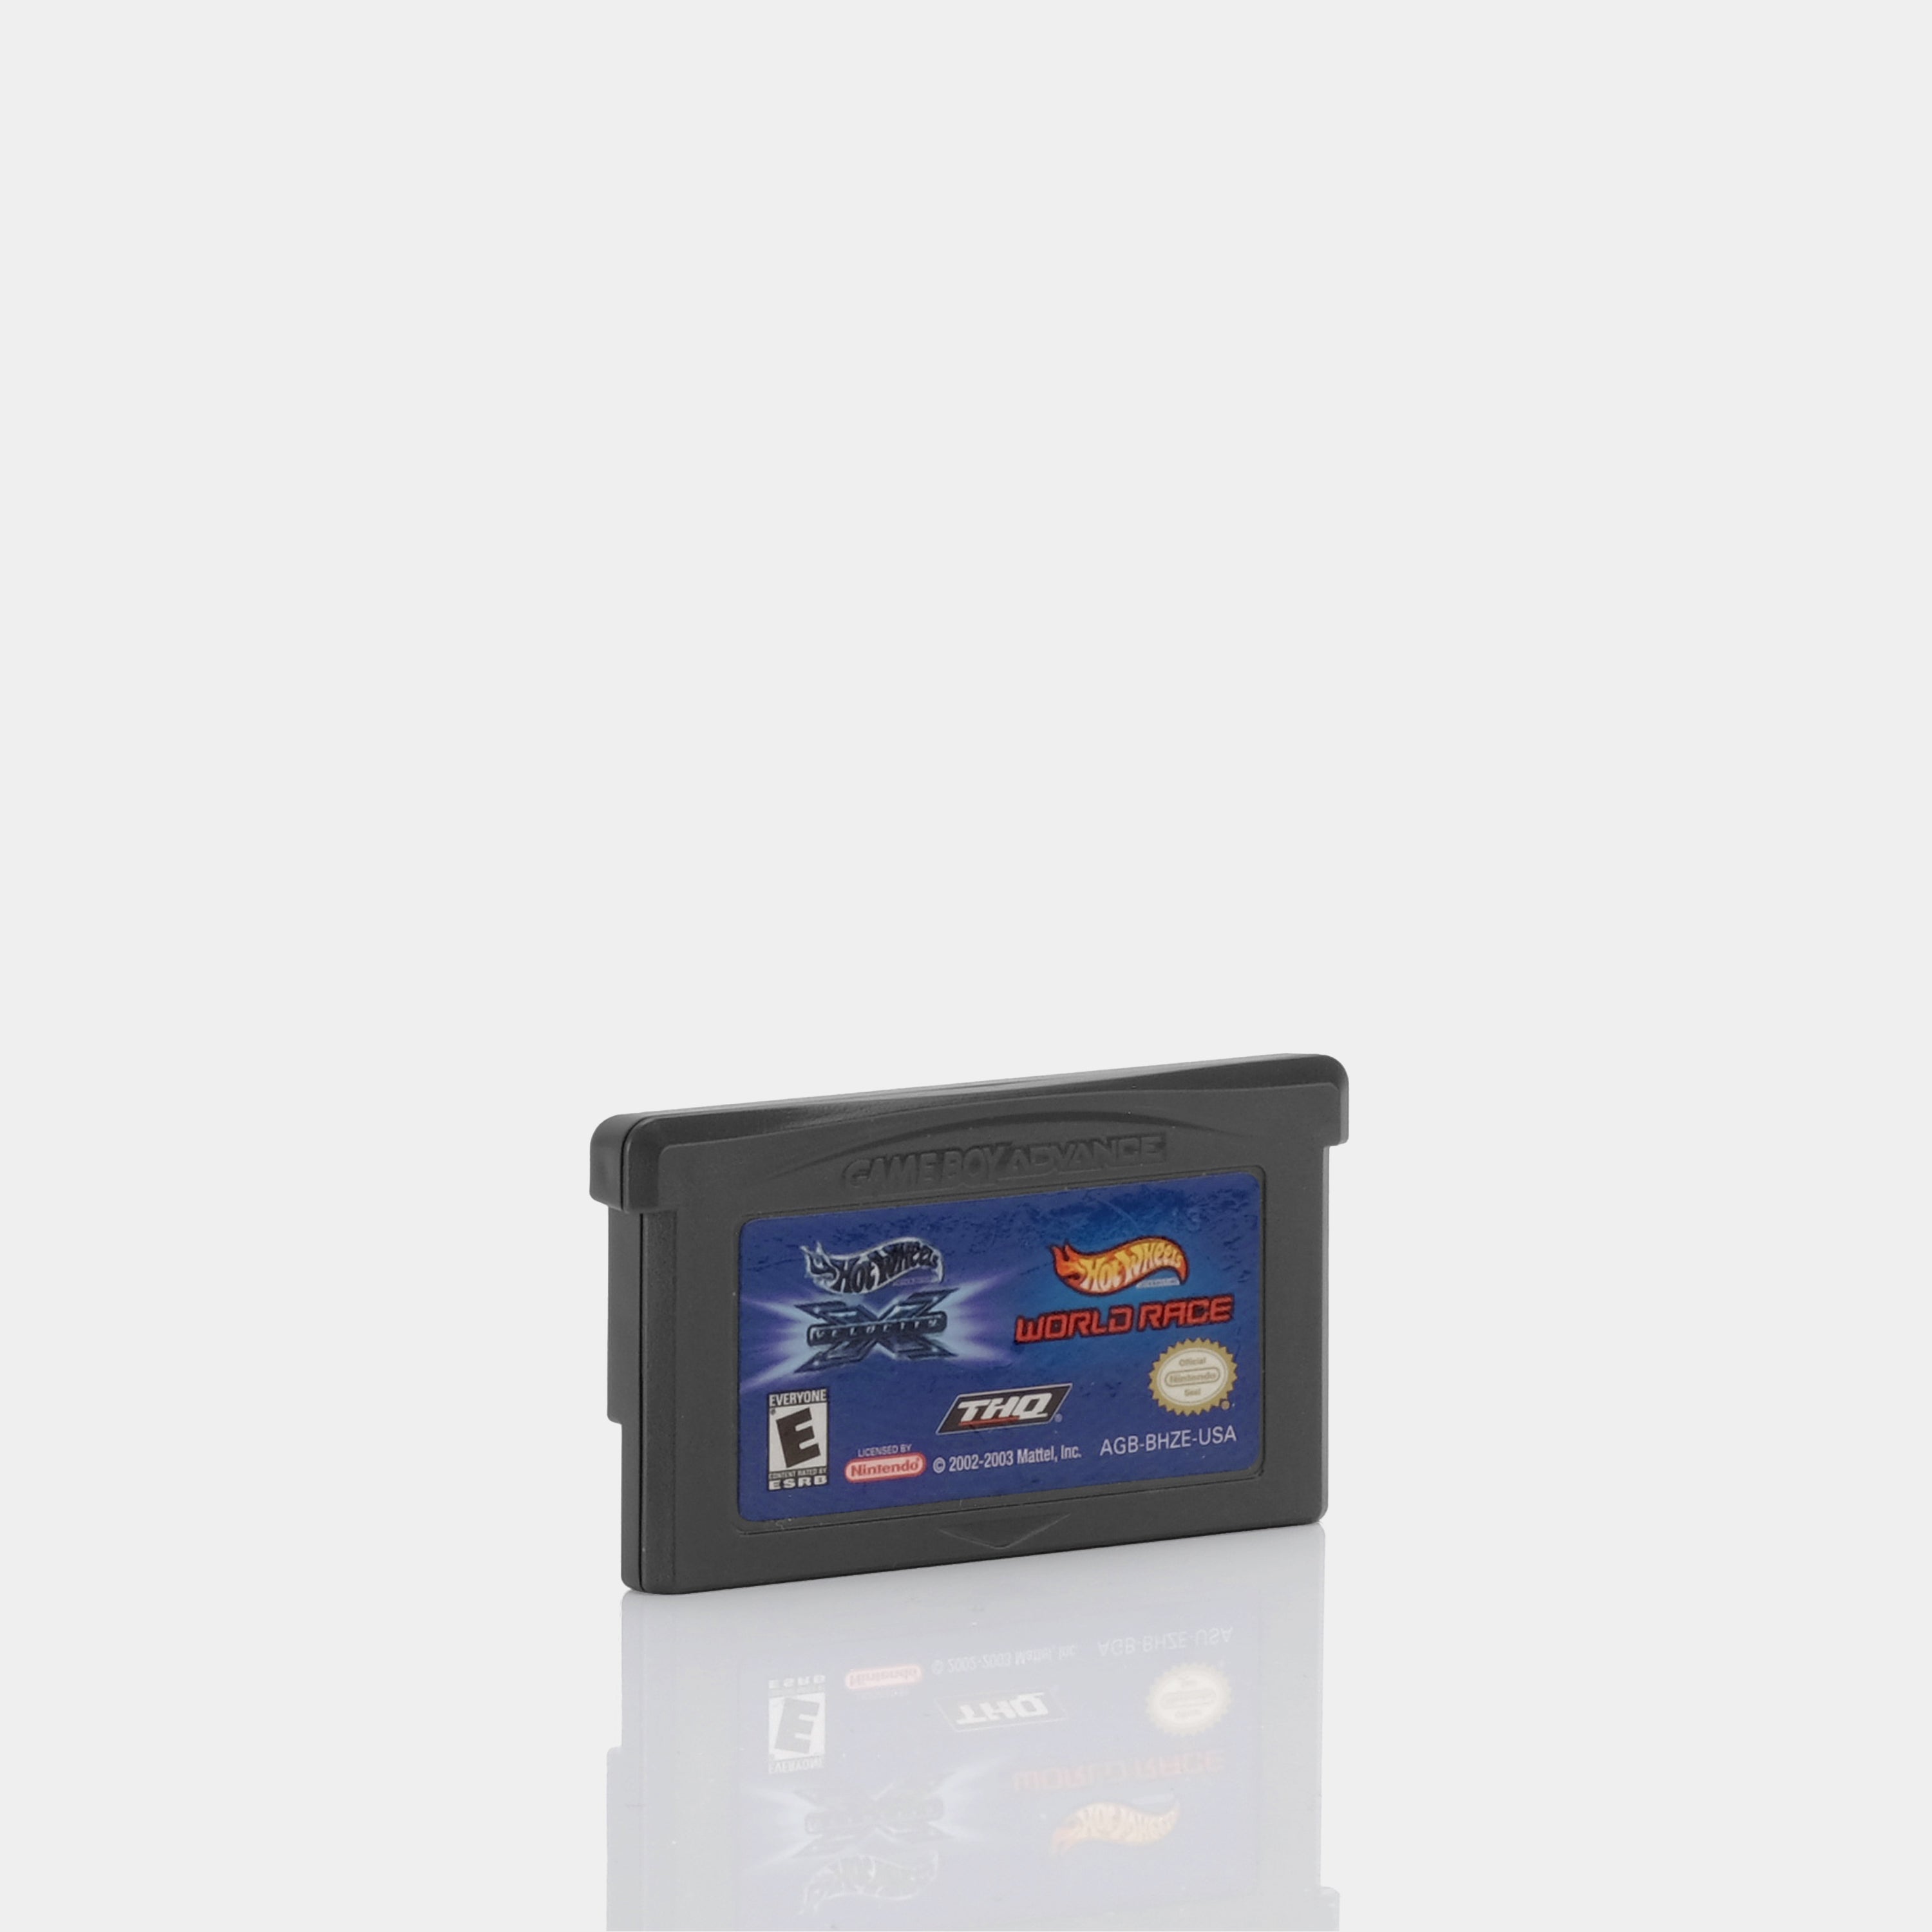 Hot Wheels: World Race / Velocity X Game Boy Advance Game